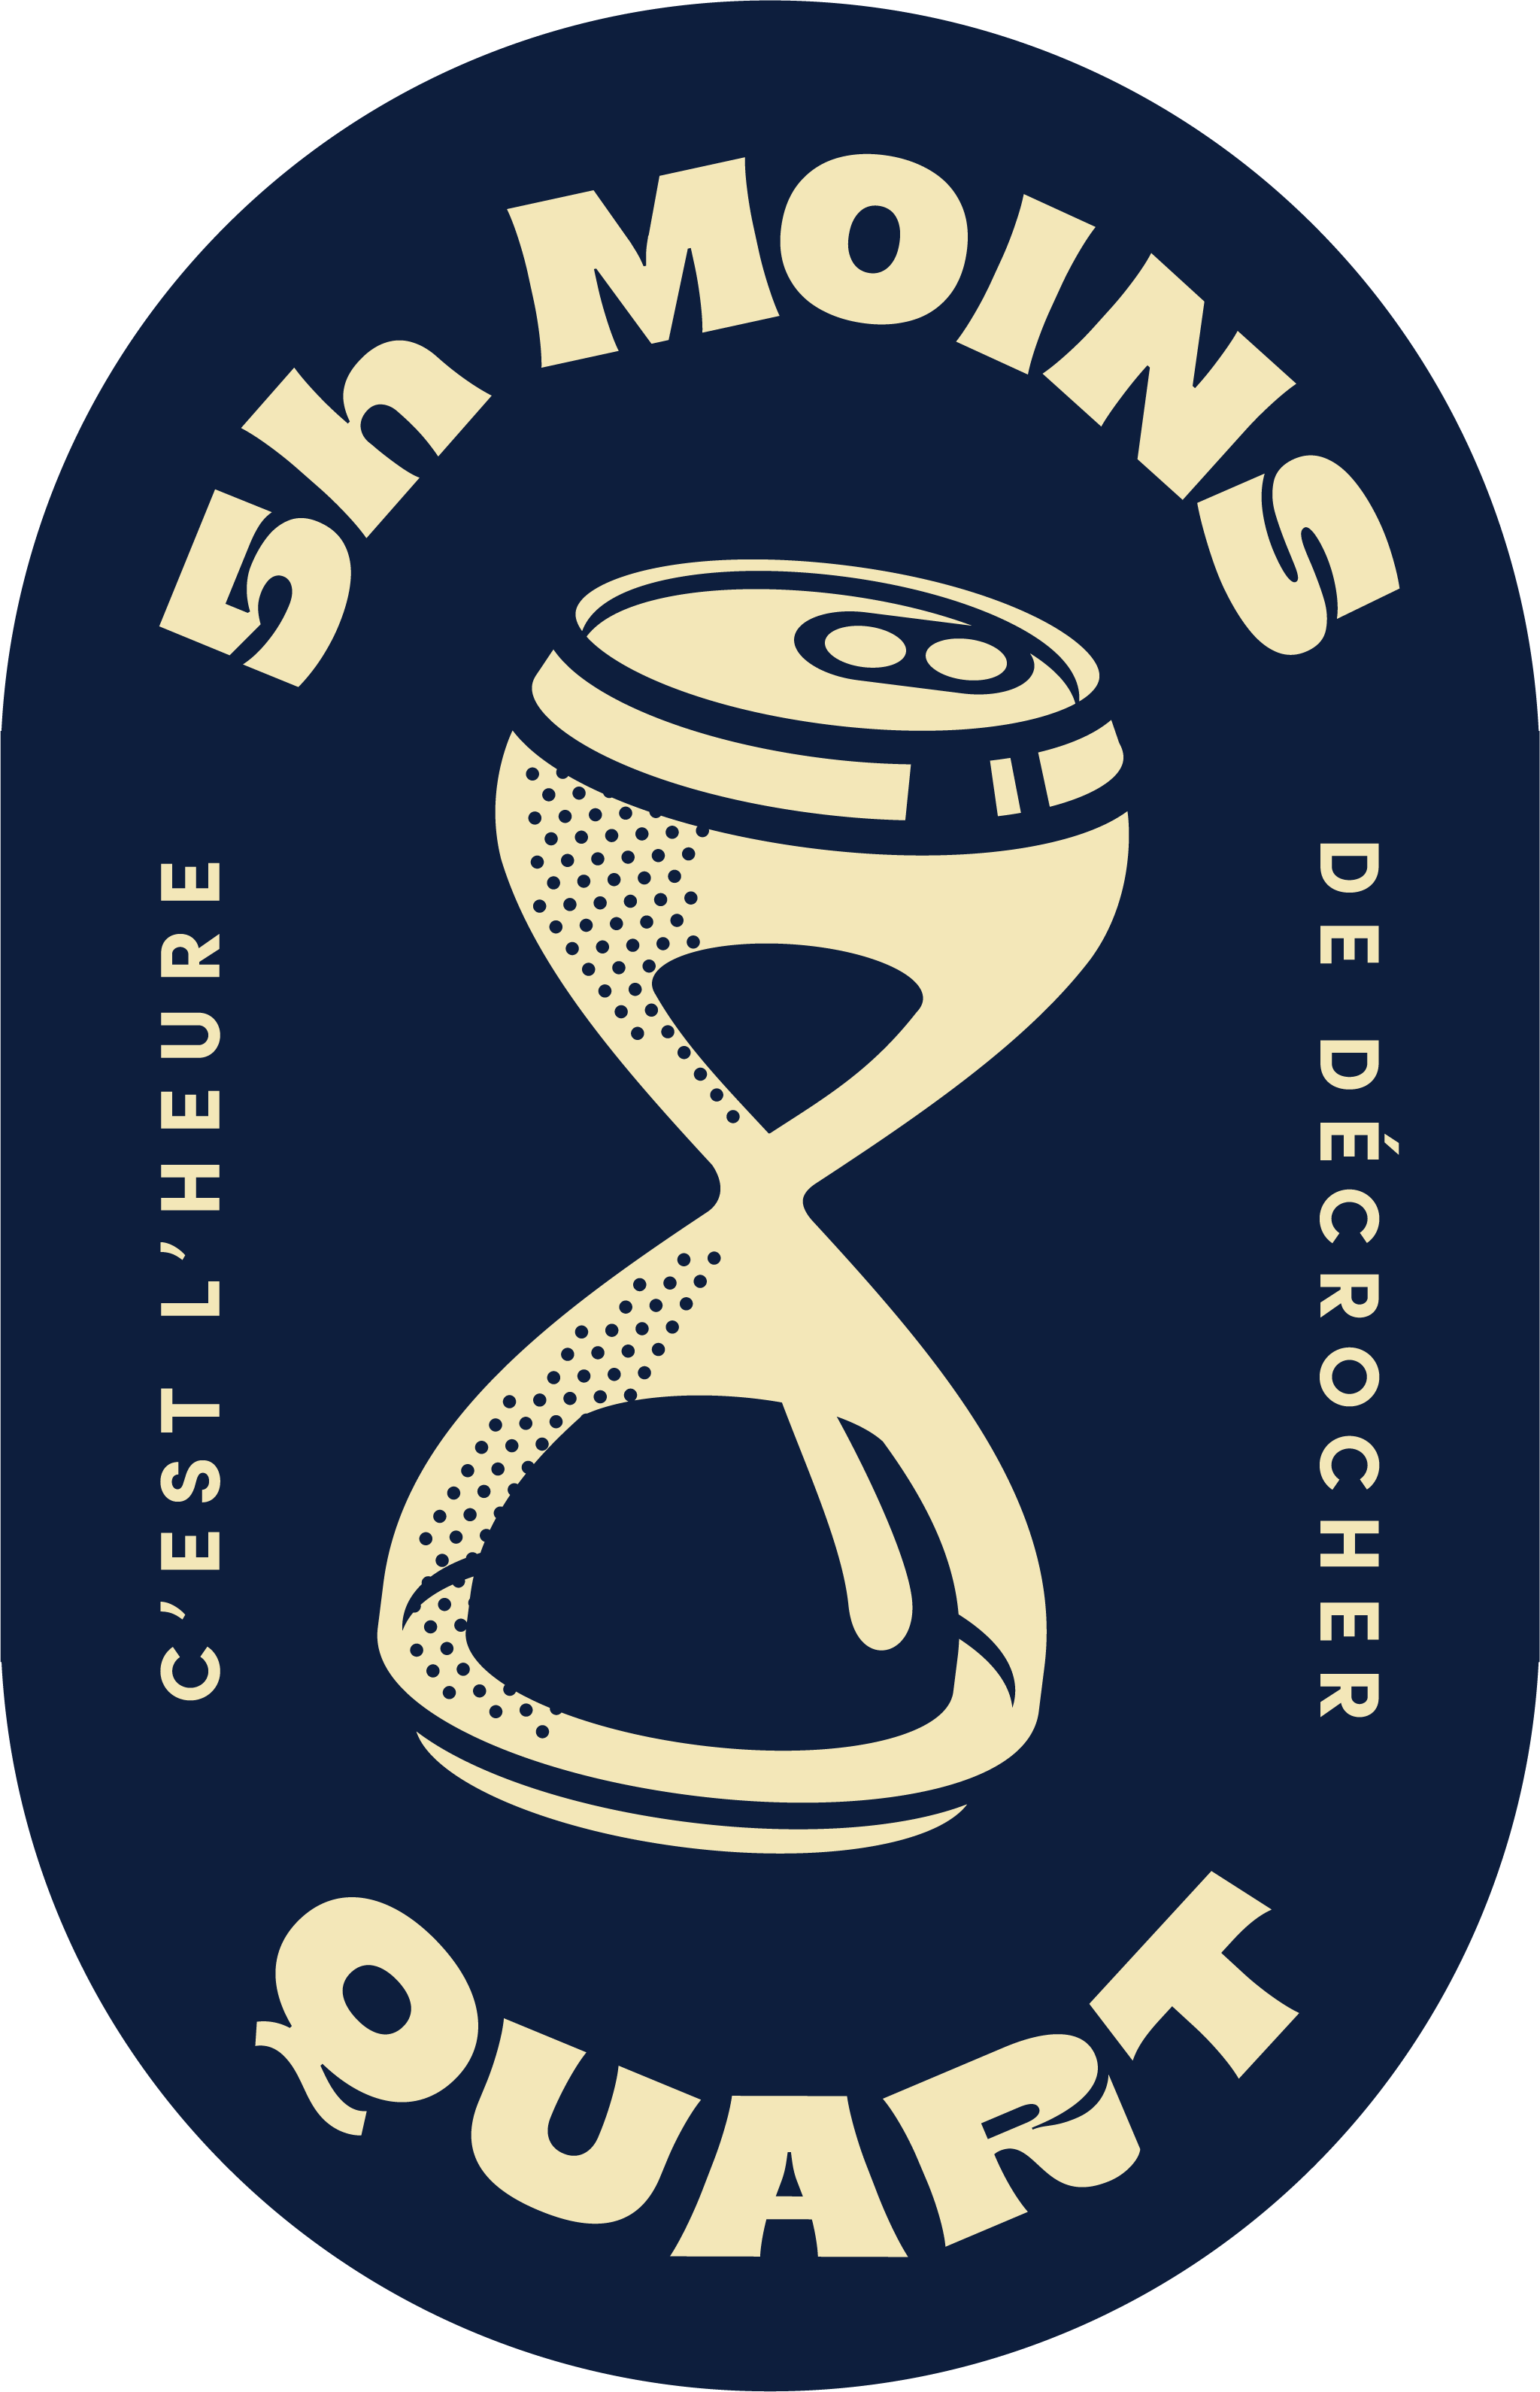 QTF logo